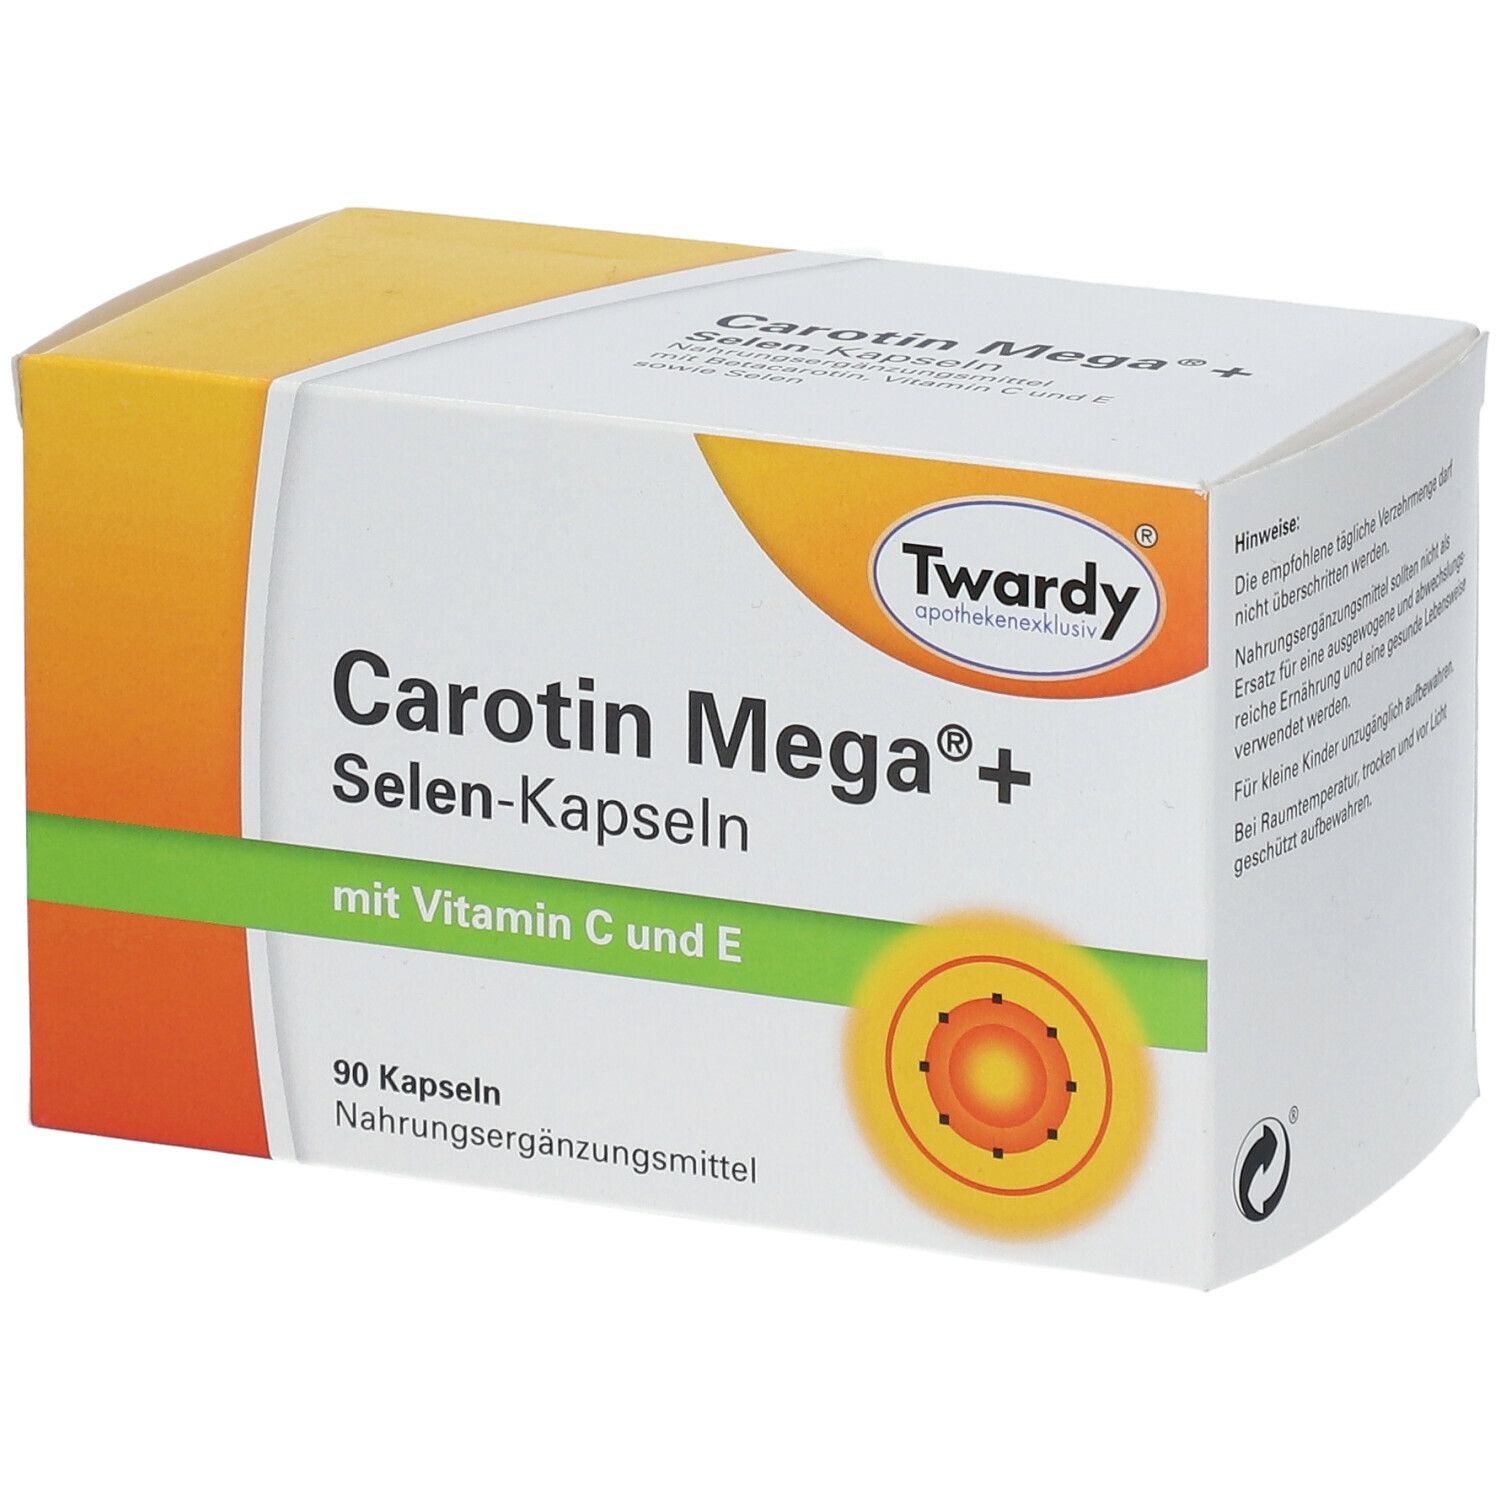 Carotin Mega® + Selen-Kapseln